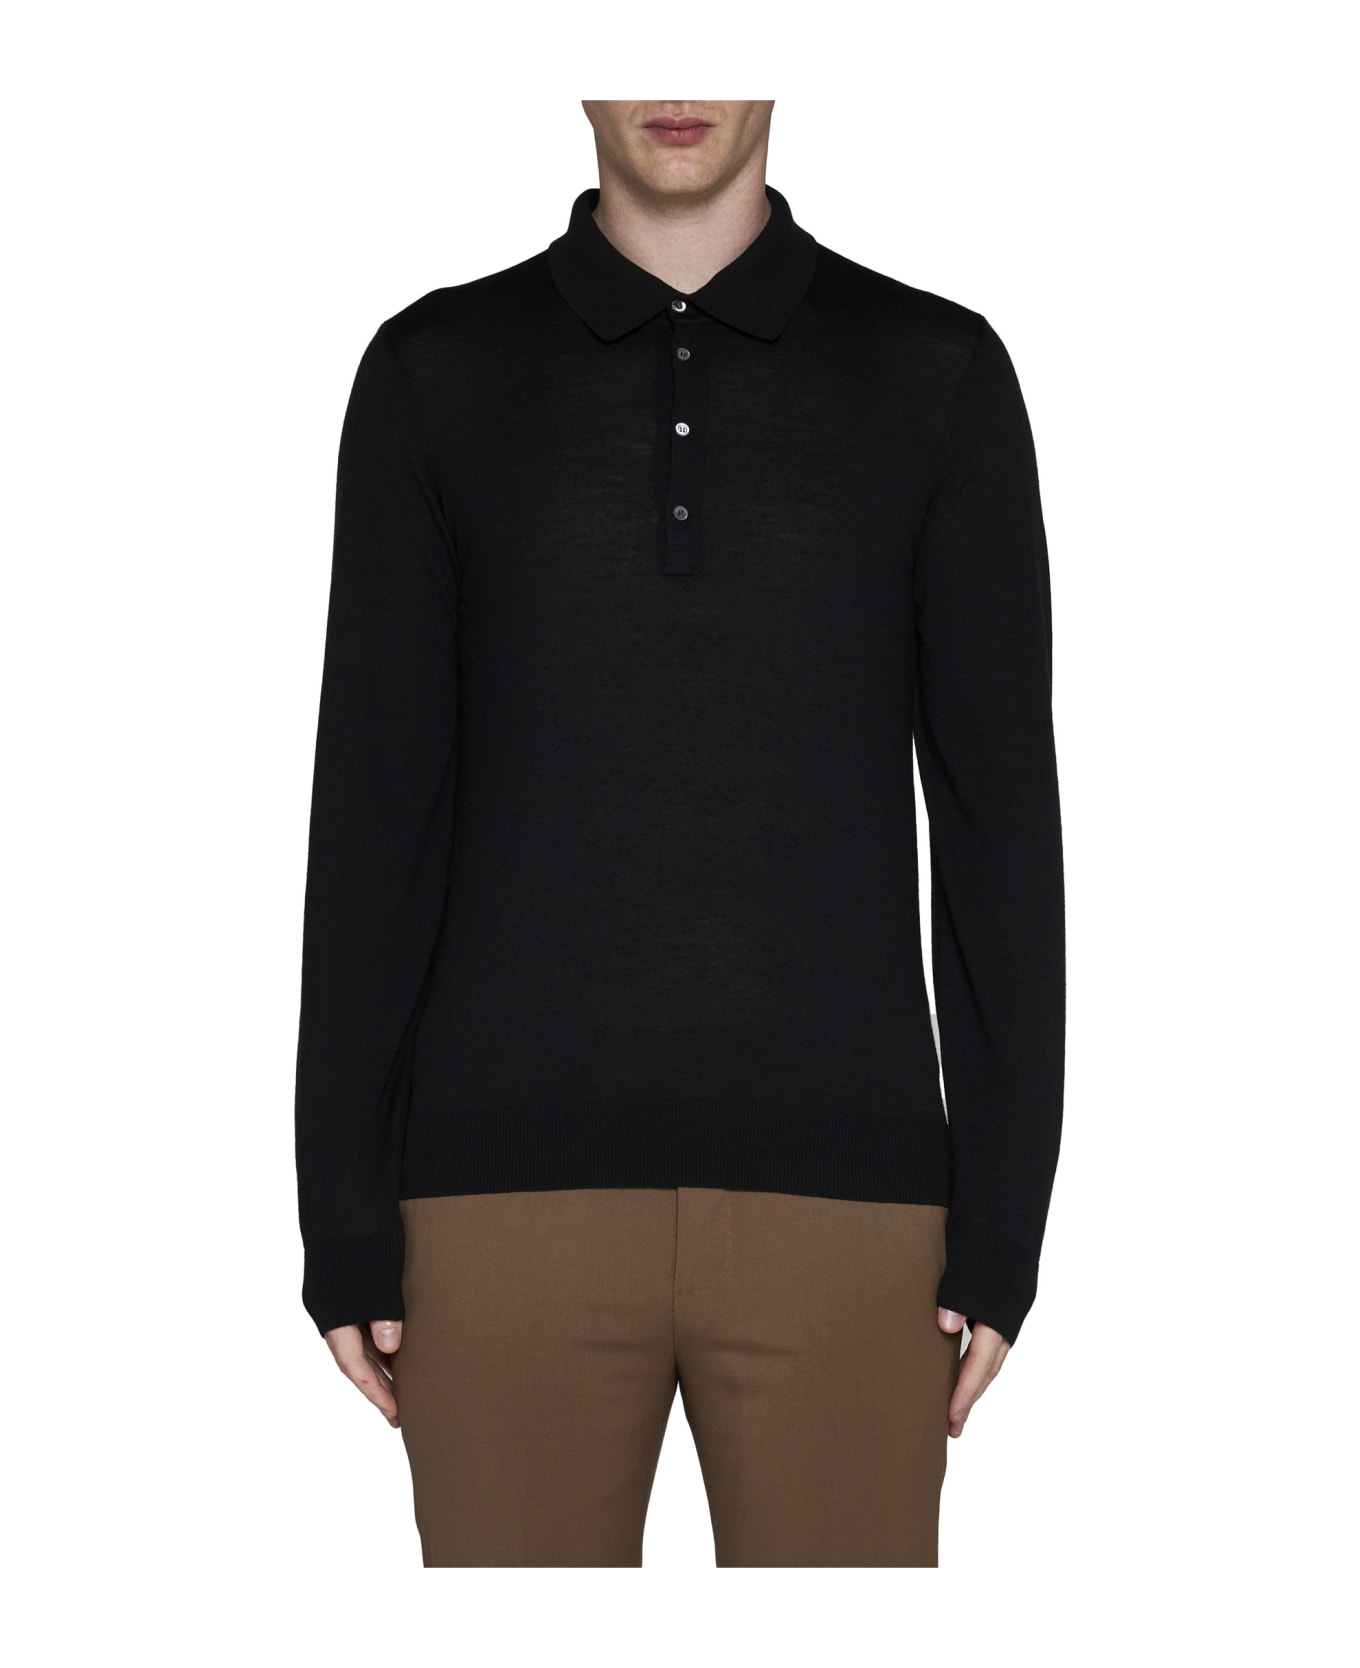 Piacenza Cashmere Polo Shirt - Black